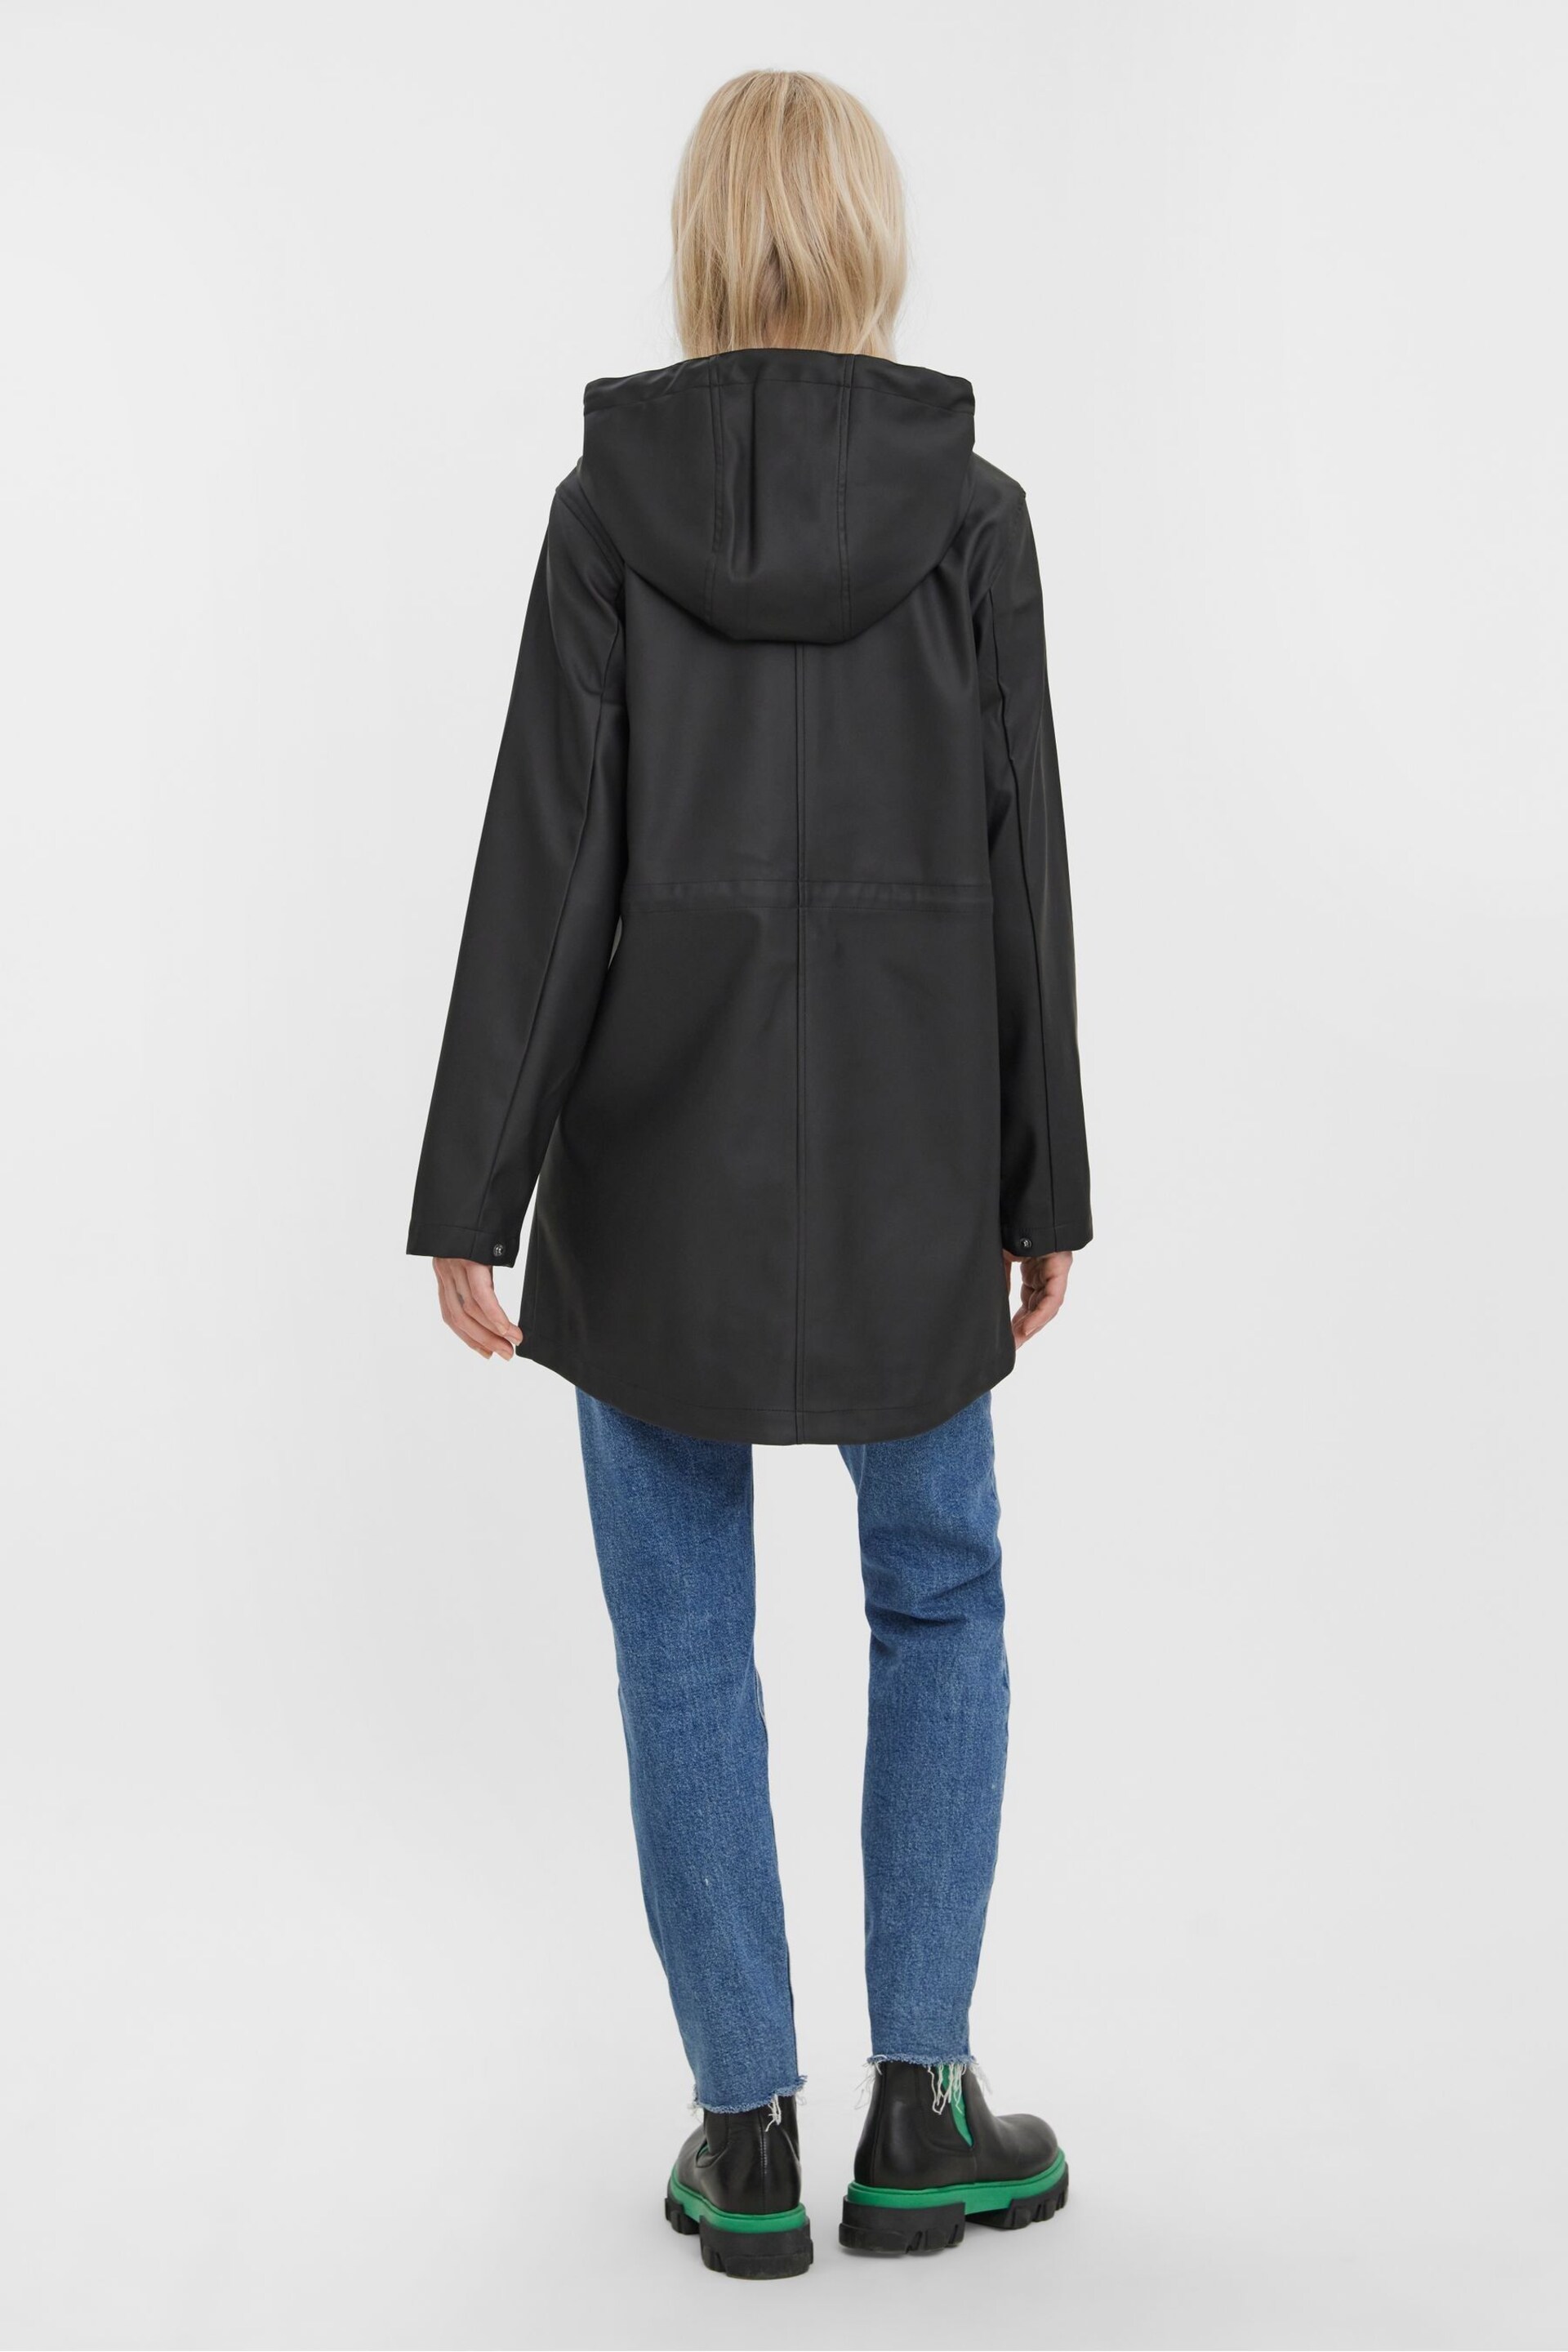 VERO MODA Black Hooded Rain Jacket - Image 3 of 5